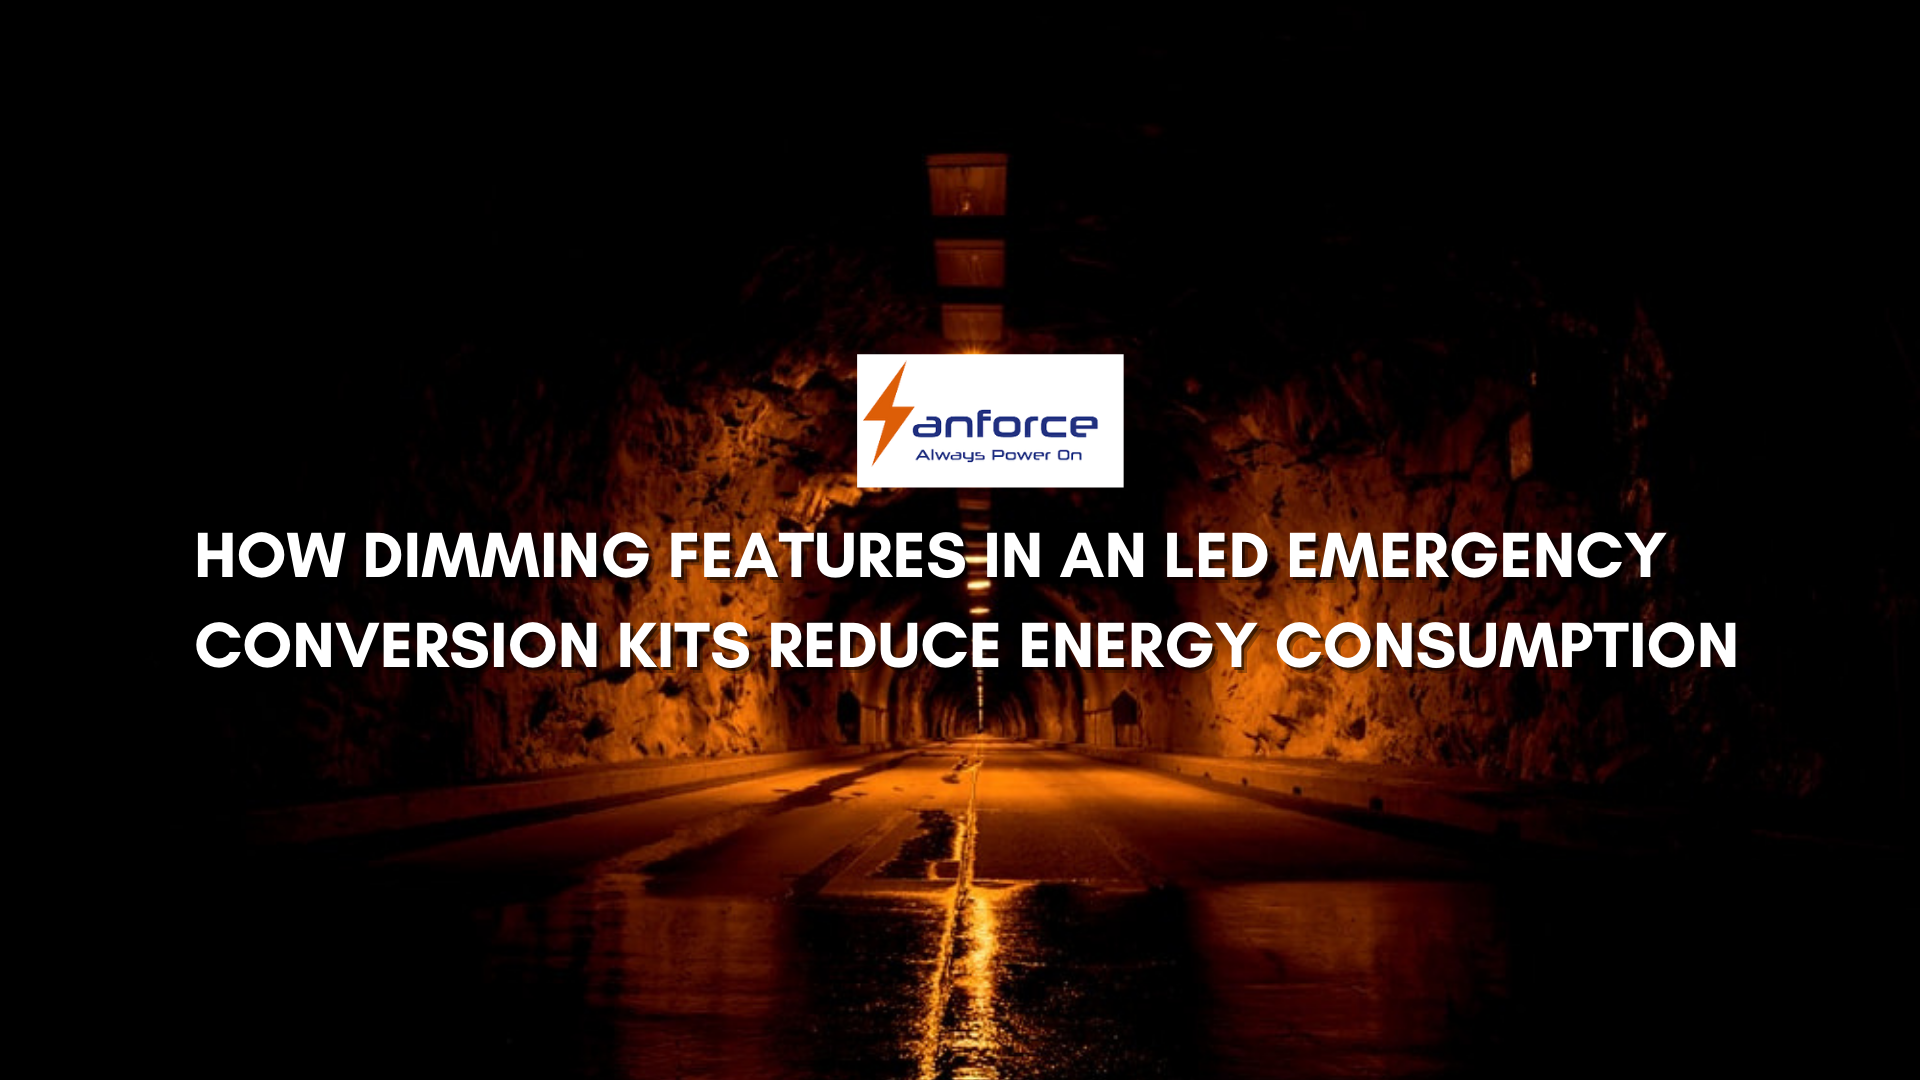 Sanforce - LED dimming features reduce energy consumption